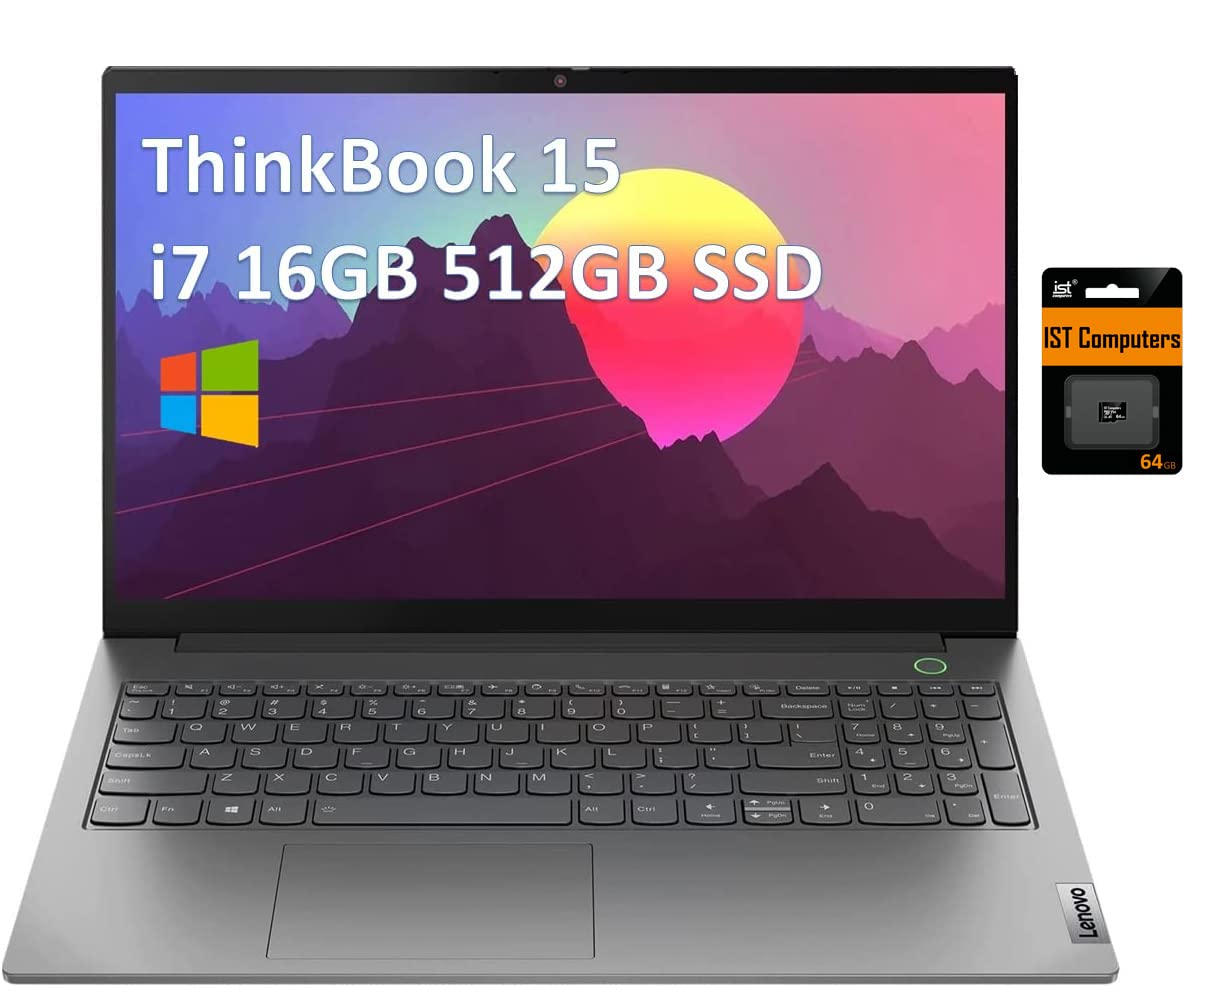 Lenovo ThinkBook 15 Gen 2 are 15.6